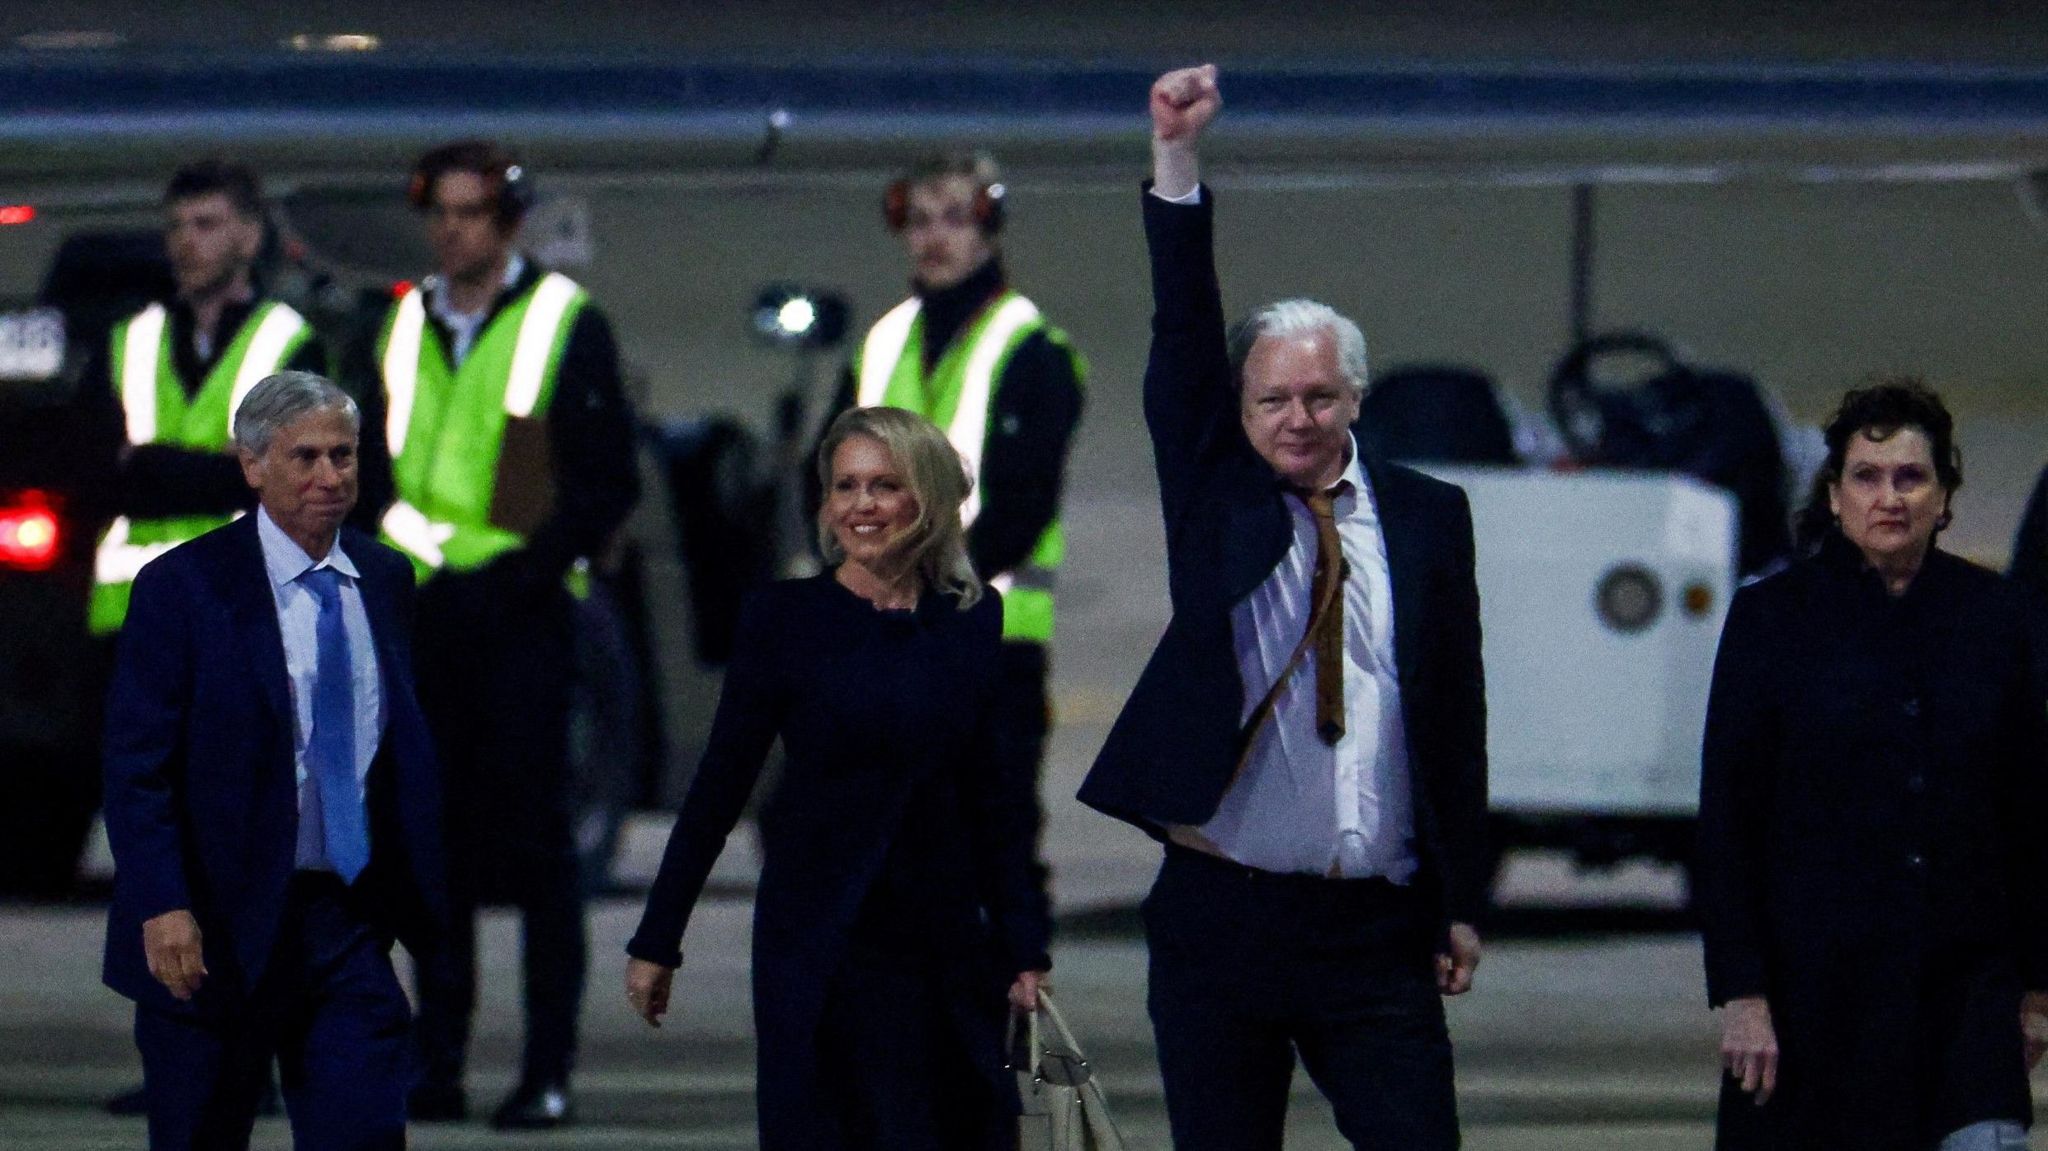 Julian Assange waves after landing in Australai